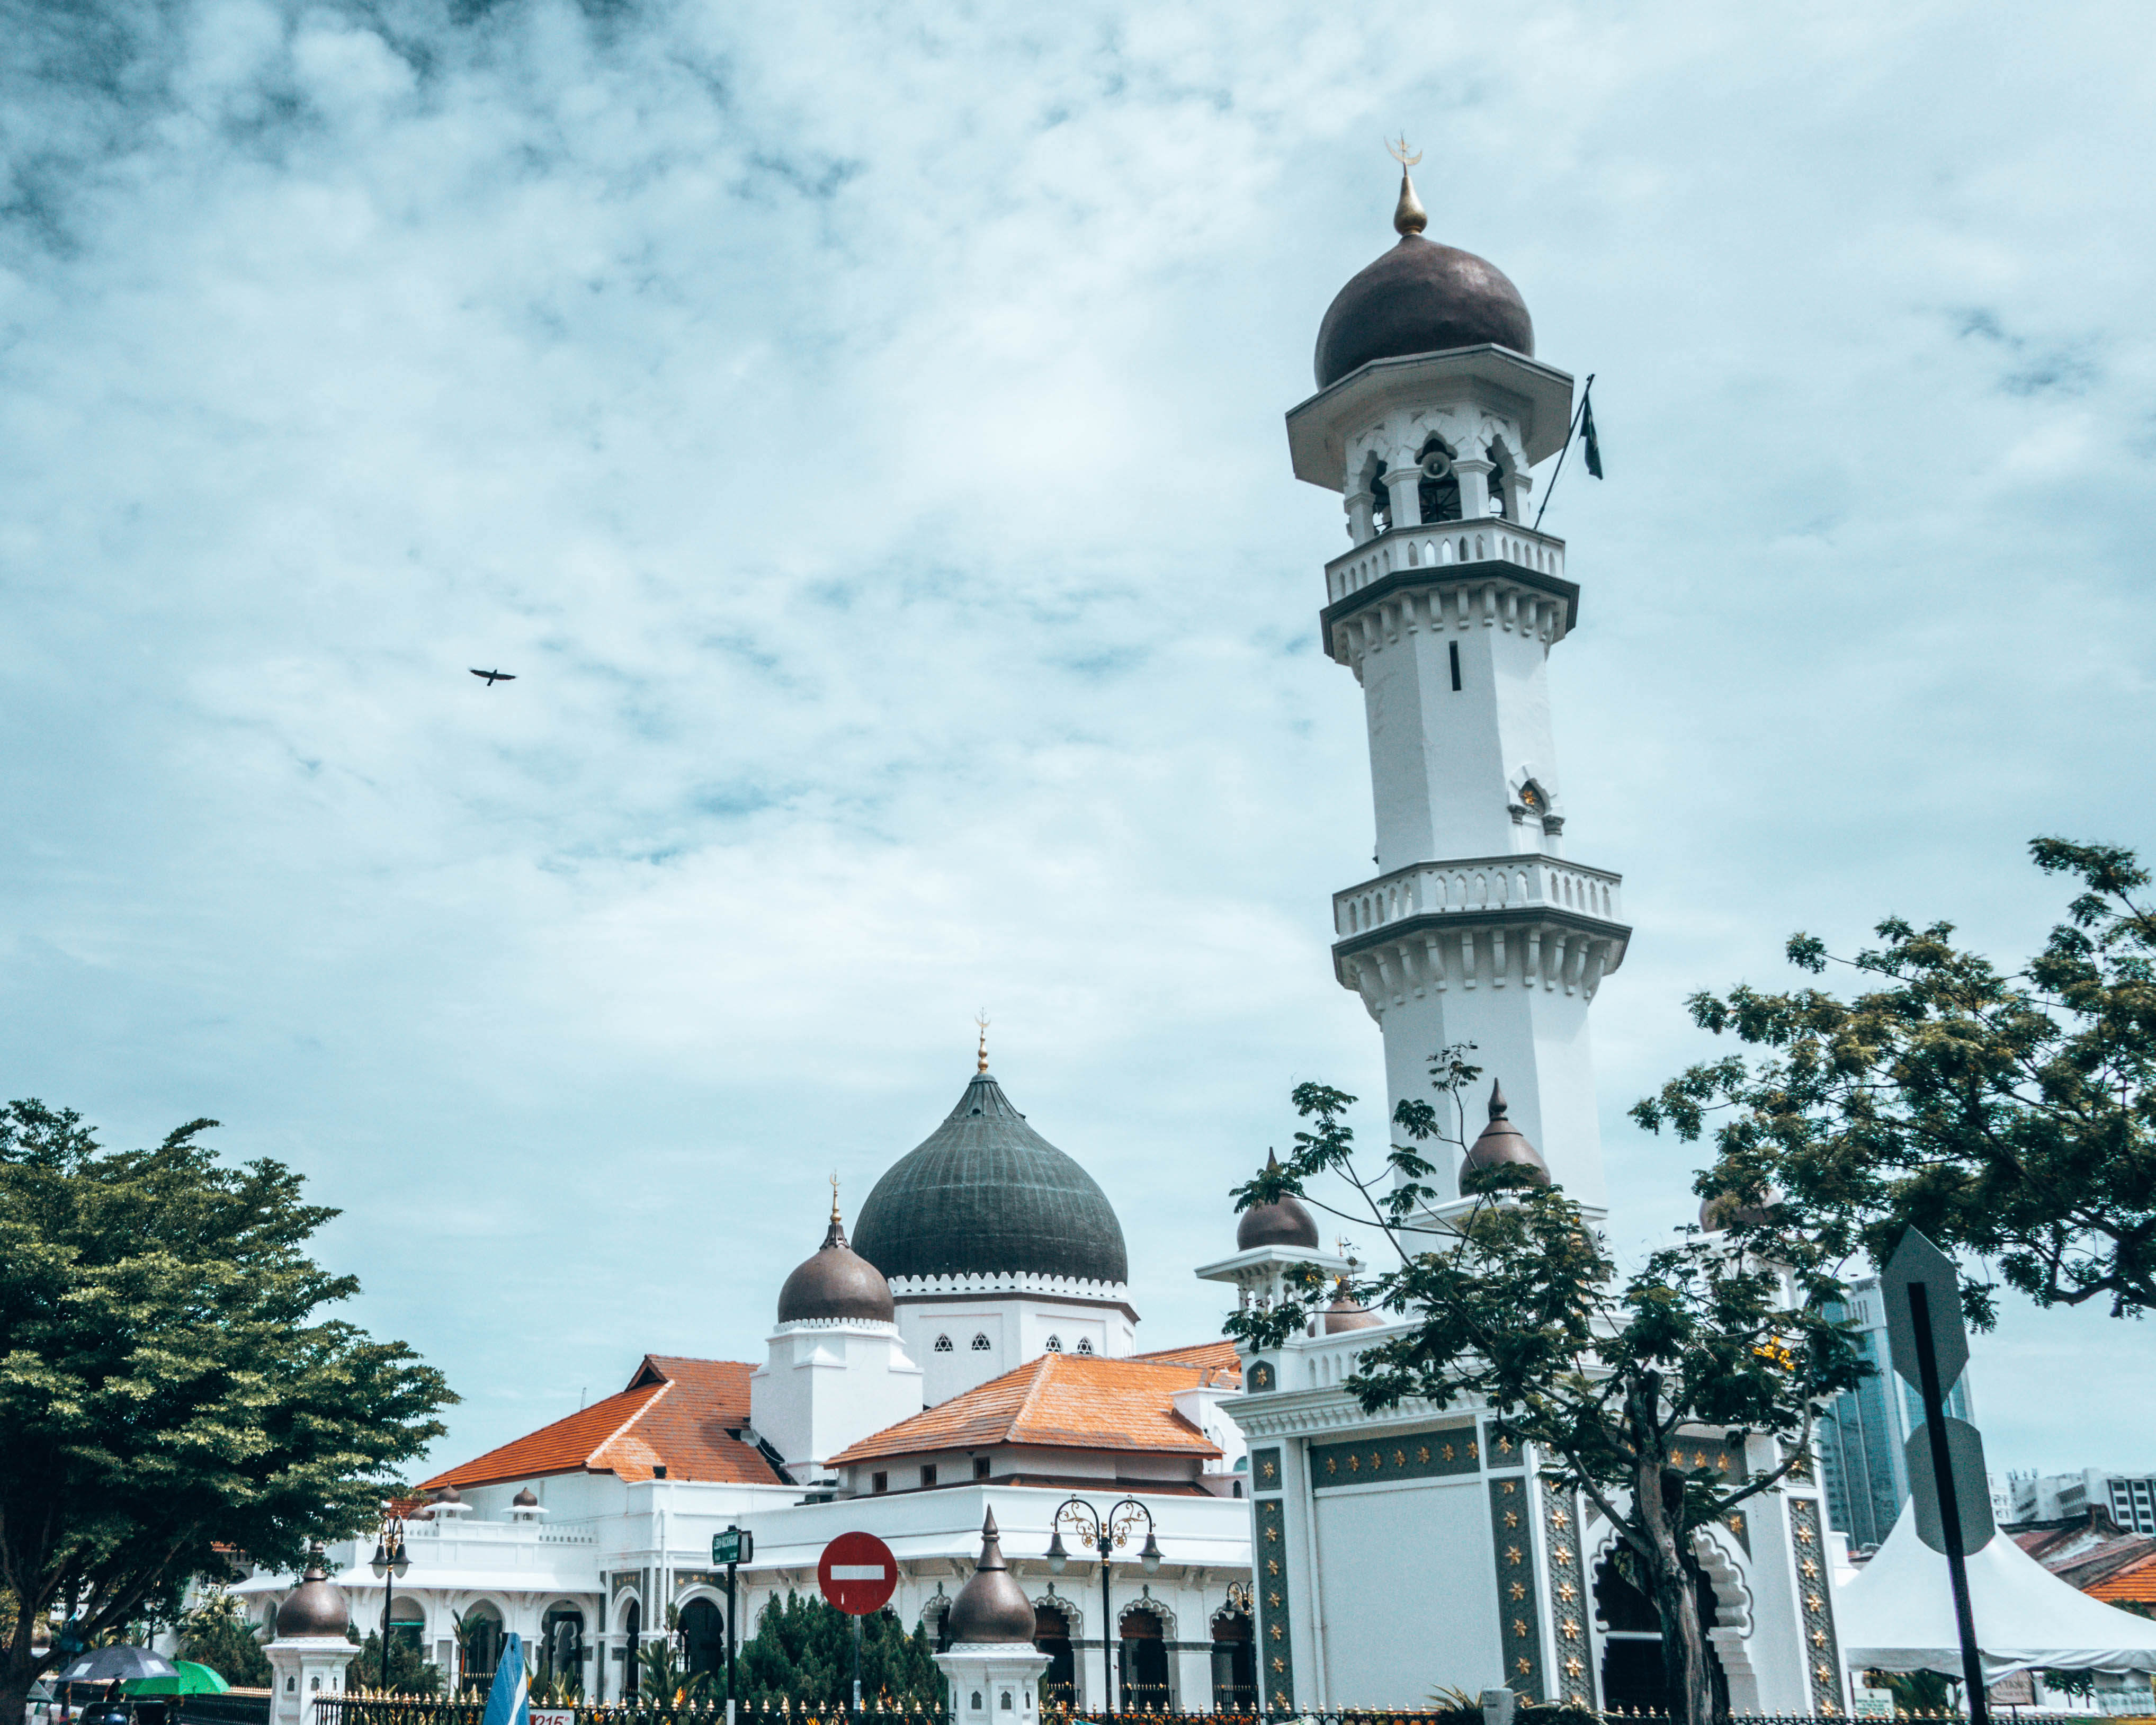 Kapitan Keling Mosque. Things to do on first trip to Penang - Wediditourway.com